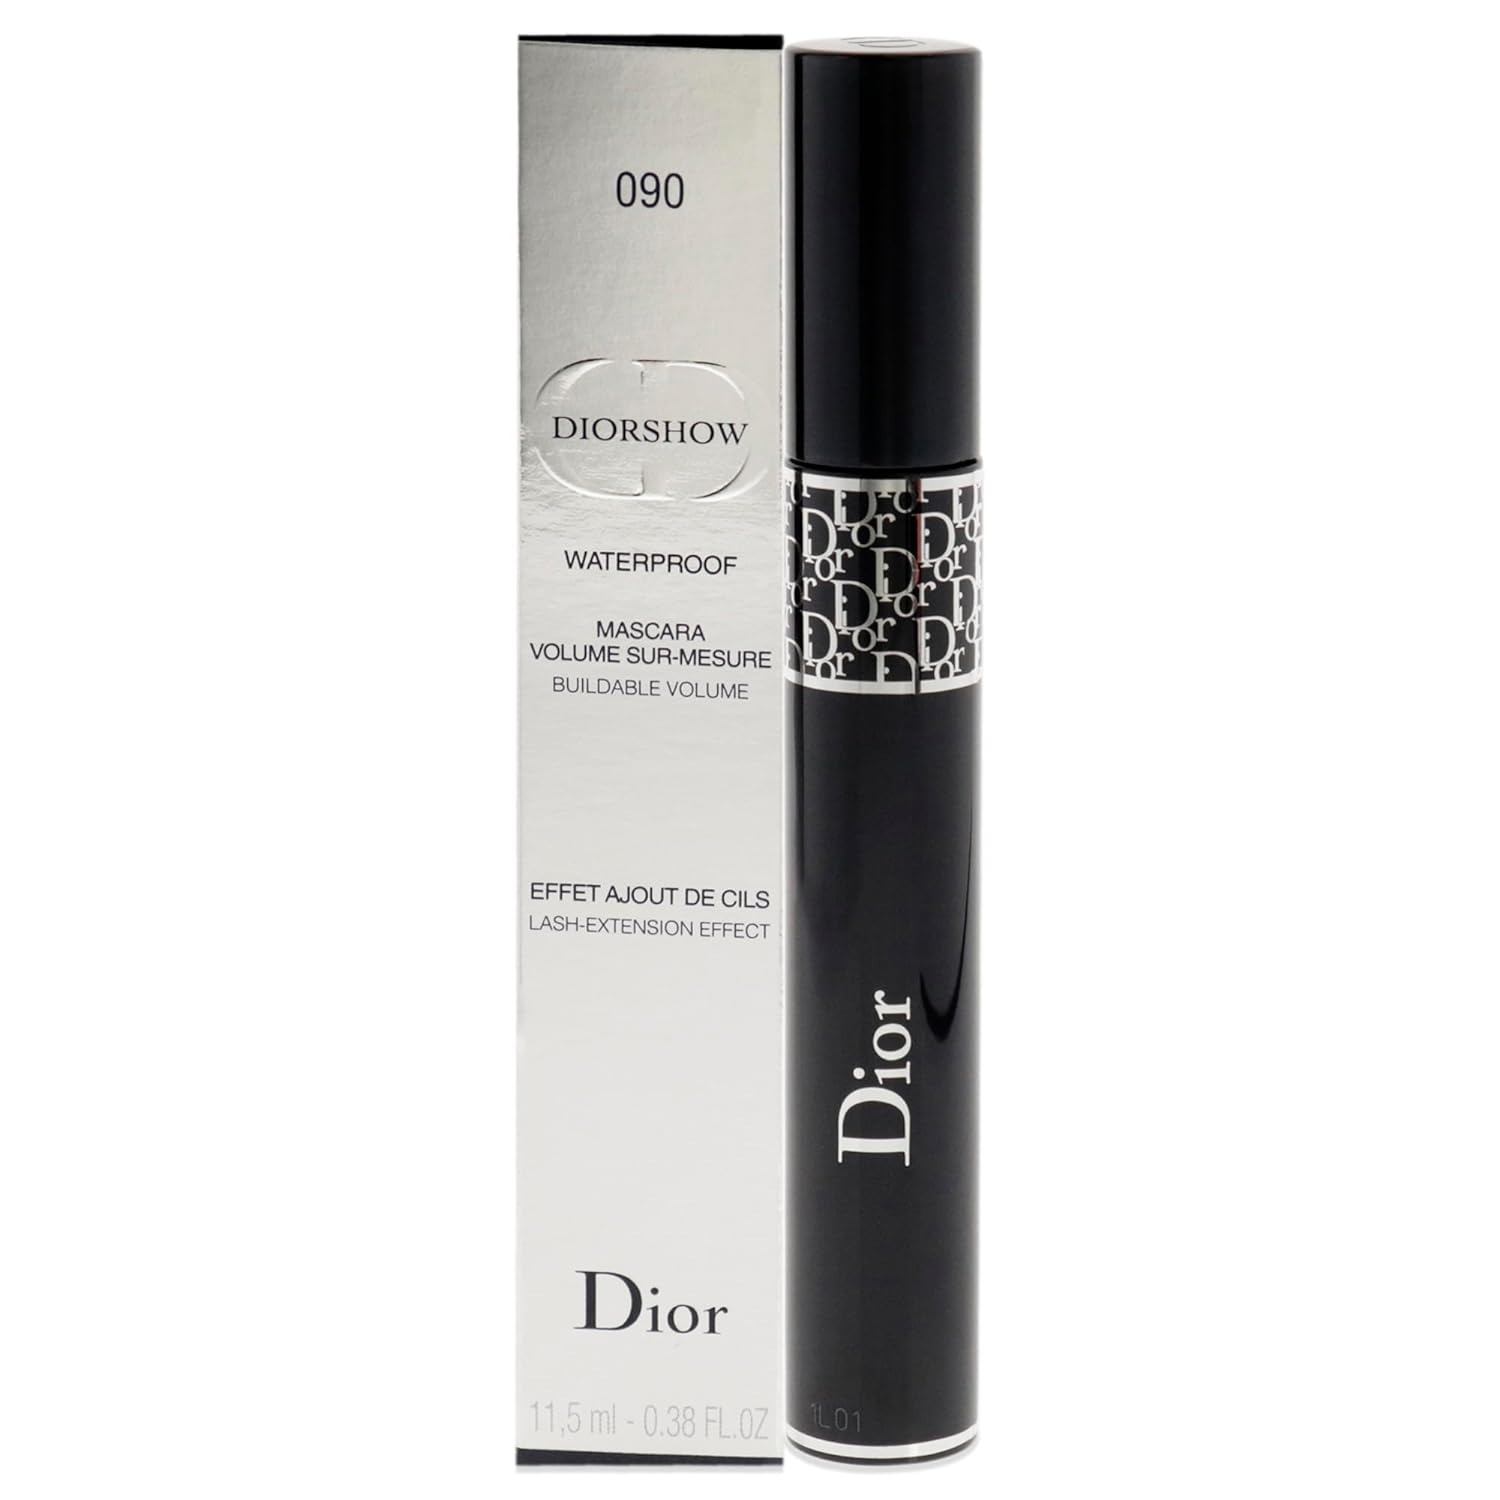 DiorShow Waterproof Mascara - 090 Catwalk Black by Christian Dior for Women - 0.38 oz Mascara